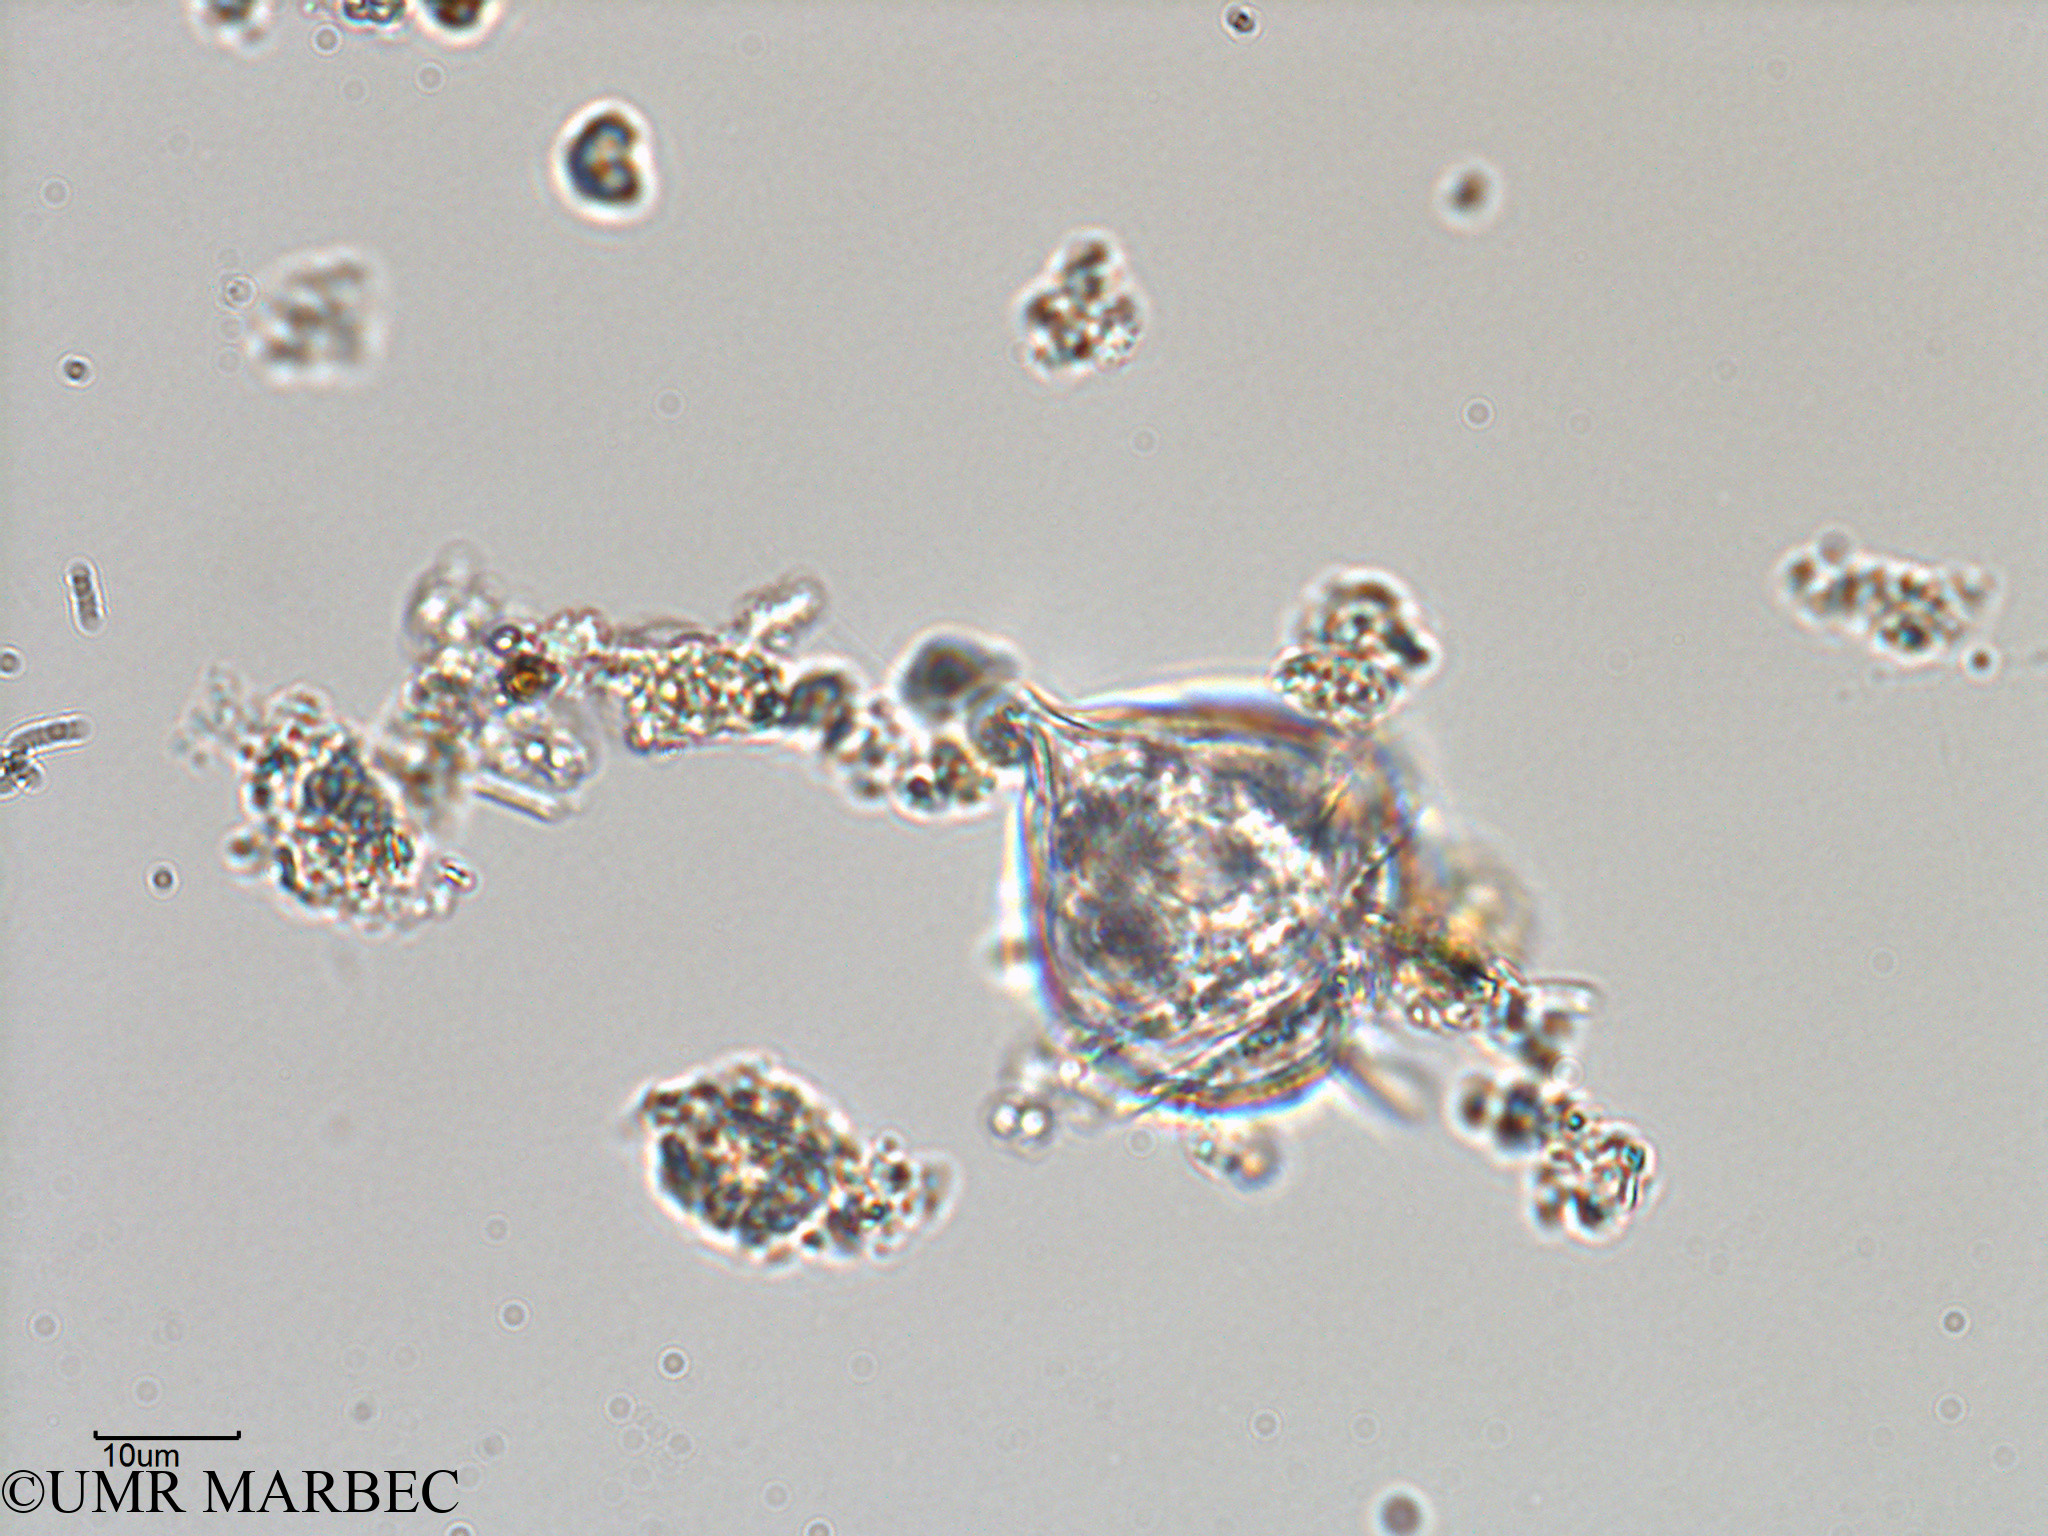 phyto/Bizerte/bizerte_lagoon/RISCO February 2015/Protoperidinium sp31 (ancien Lagune_T1-C-Protoperidinium sp31 -7).tif(copy).jpg